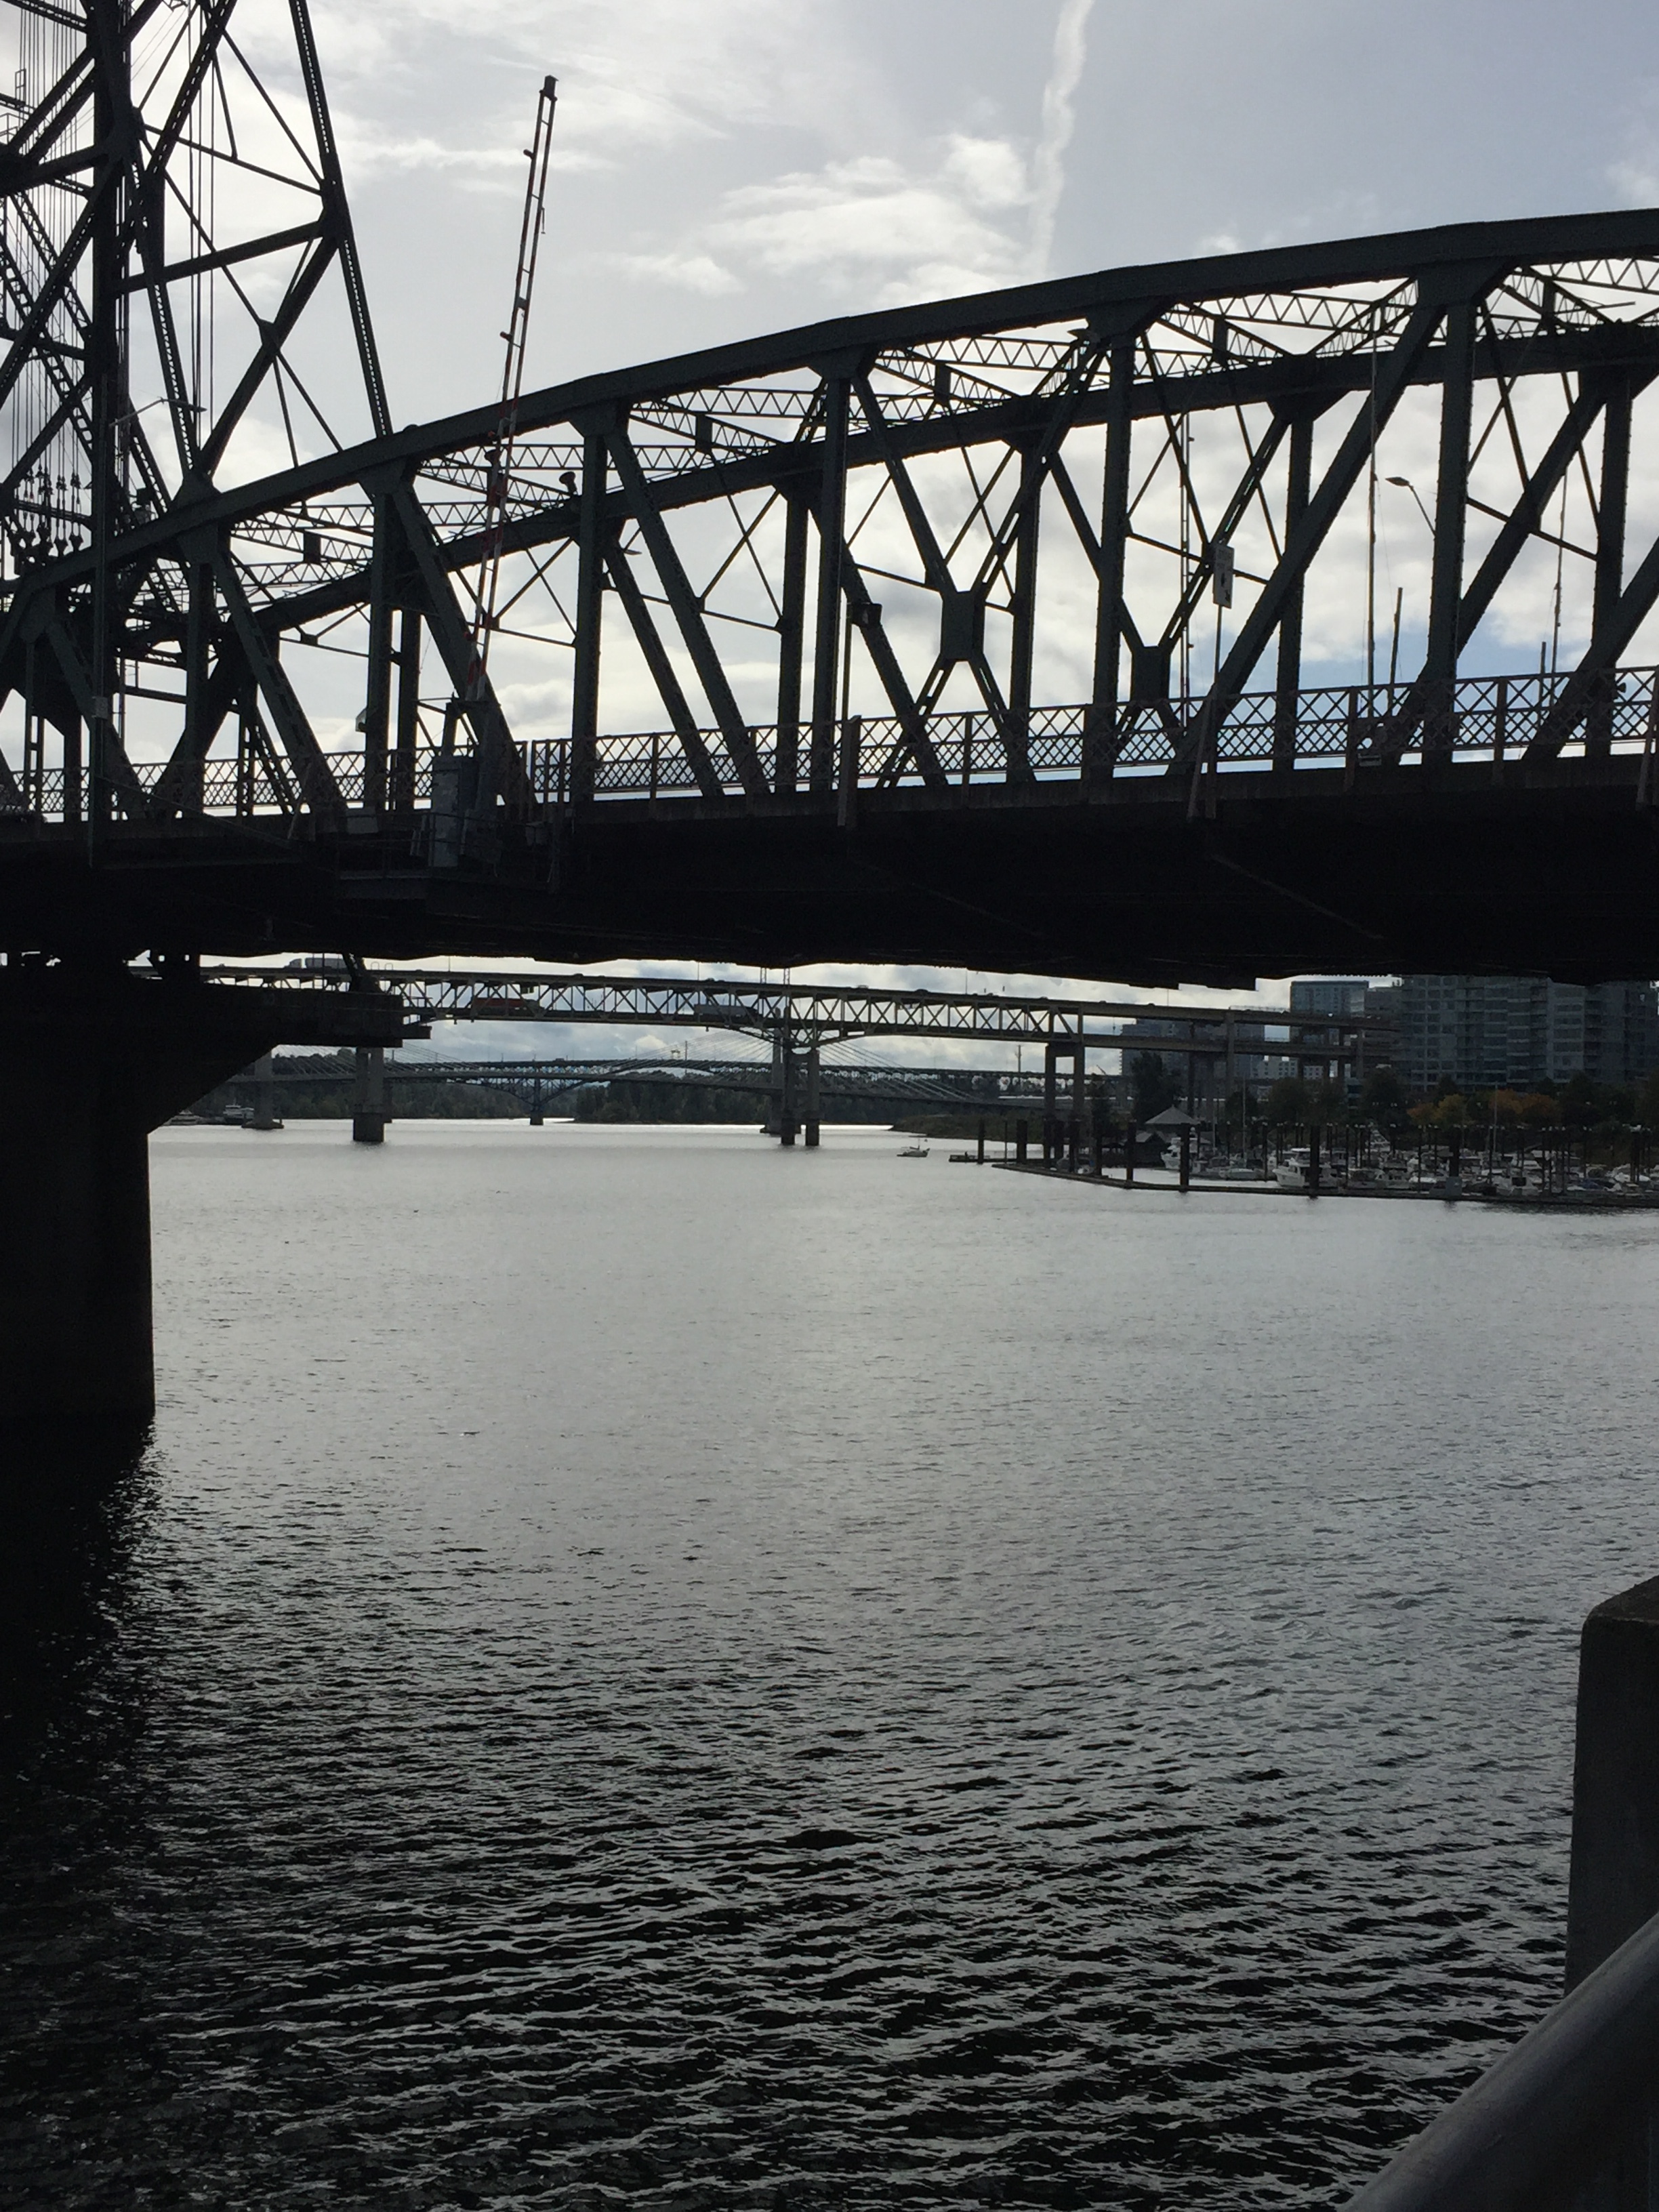 Bridges over the Willamette River near Waterfront Park